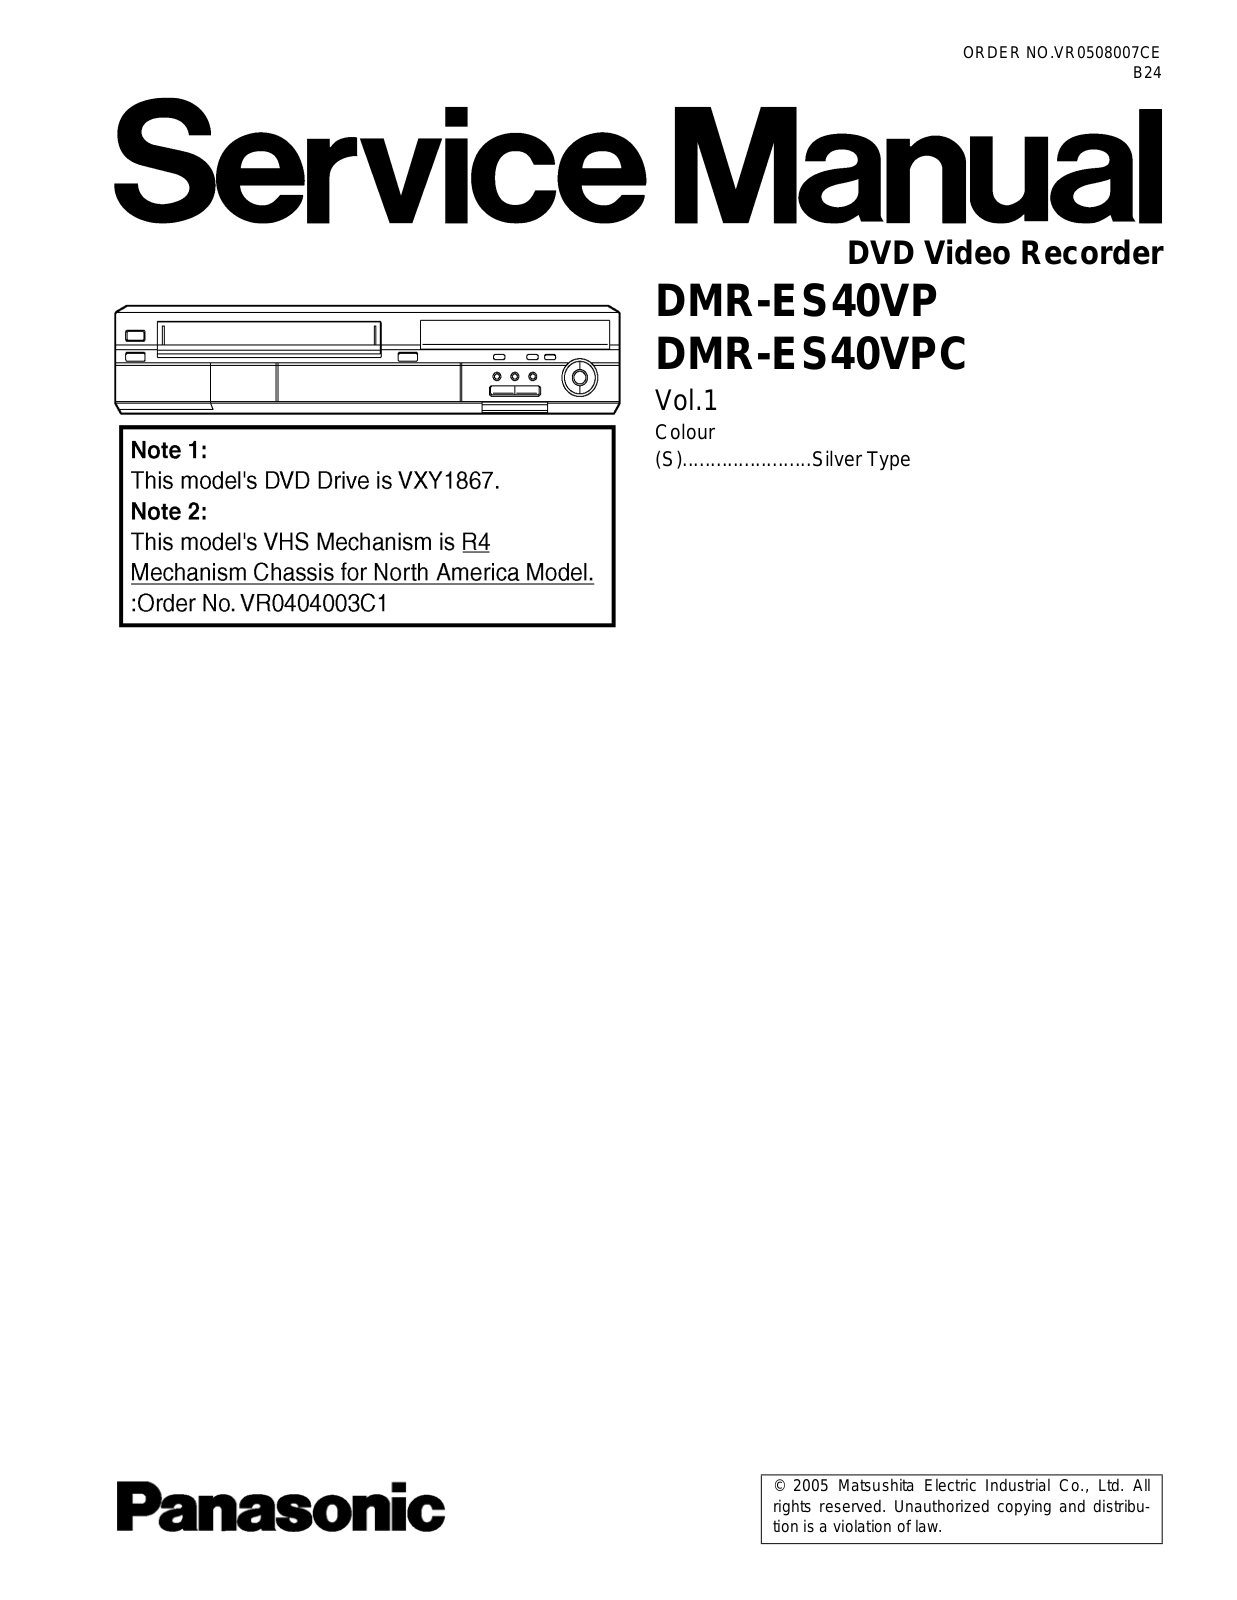 Panasonic DMRES40V Service Manual